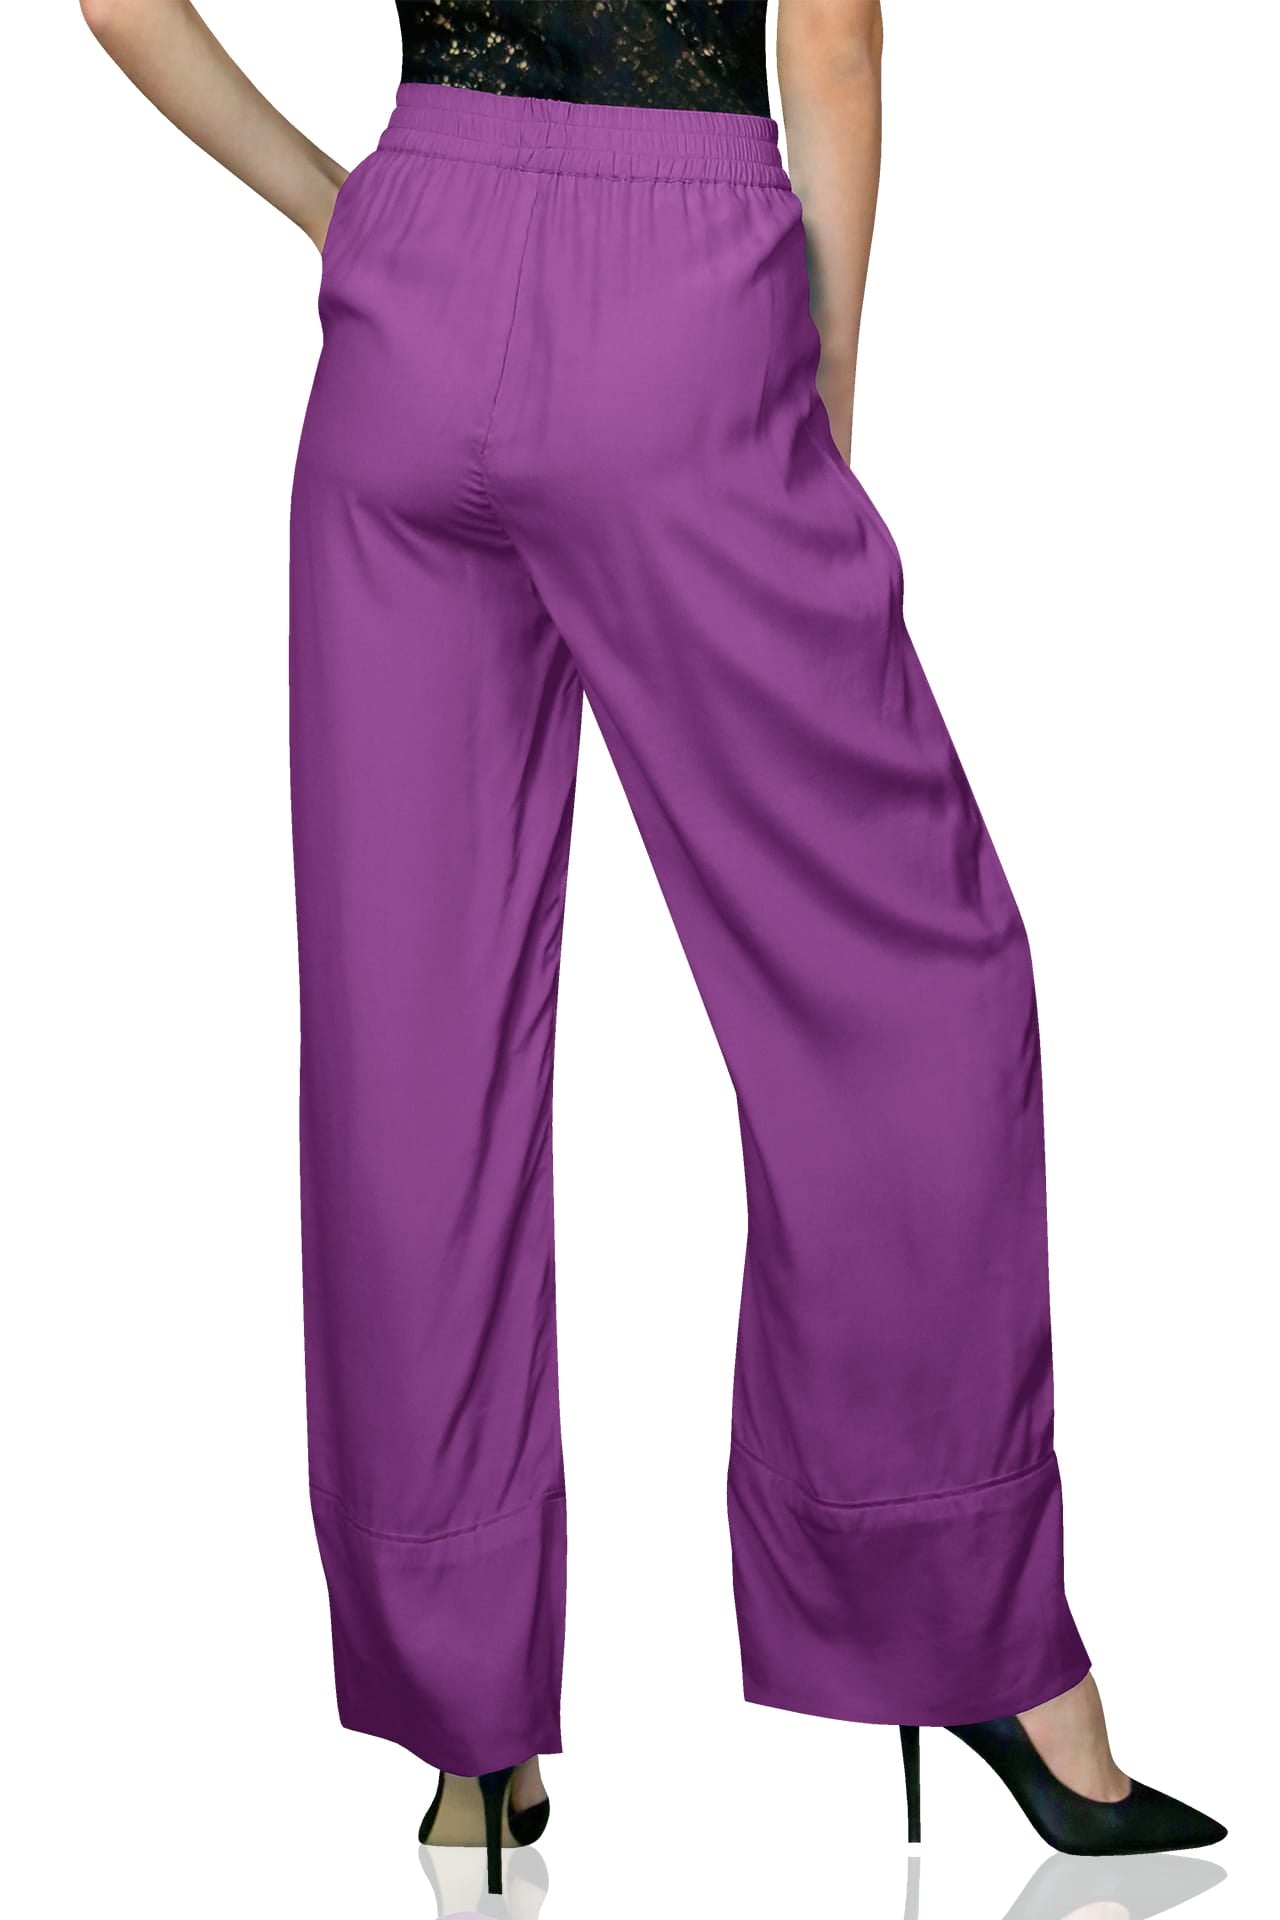 "purple color pants" "straight leg dress pants" "womens pants purple" "Kyle X Shahida"